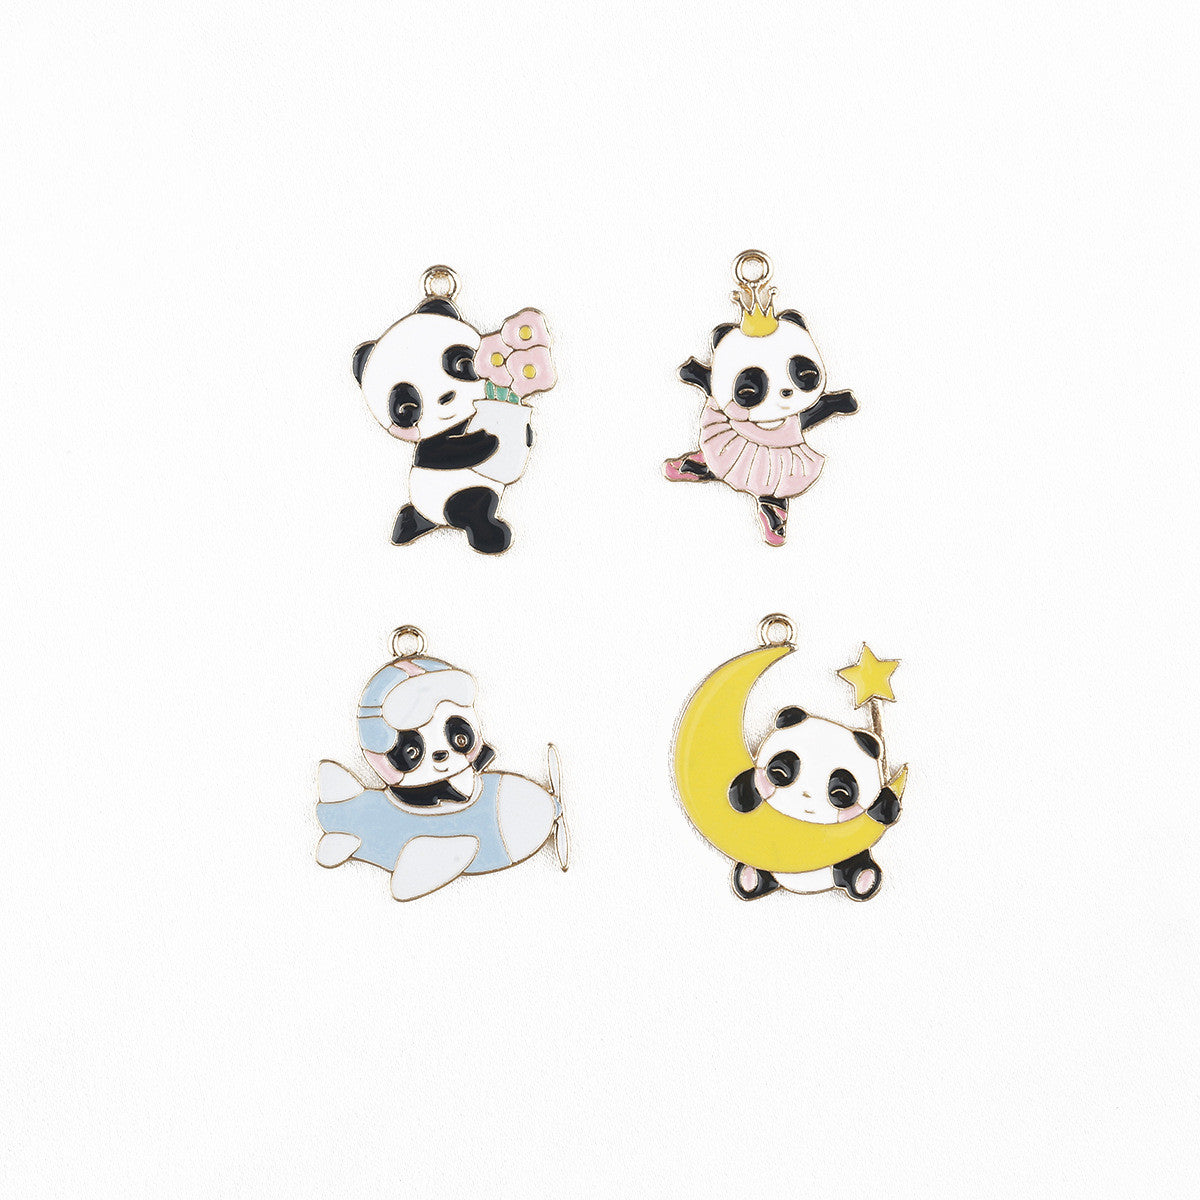 Panda Metal Charms Earrings Accessories Pendant Accessories DIY